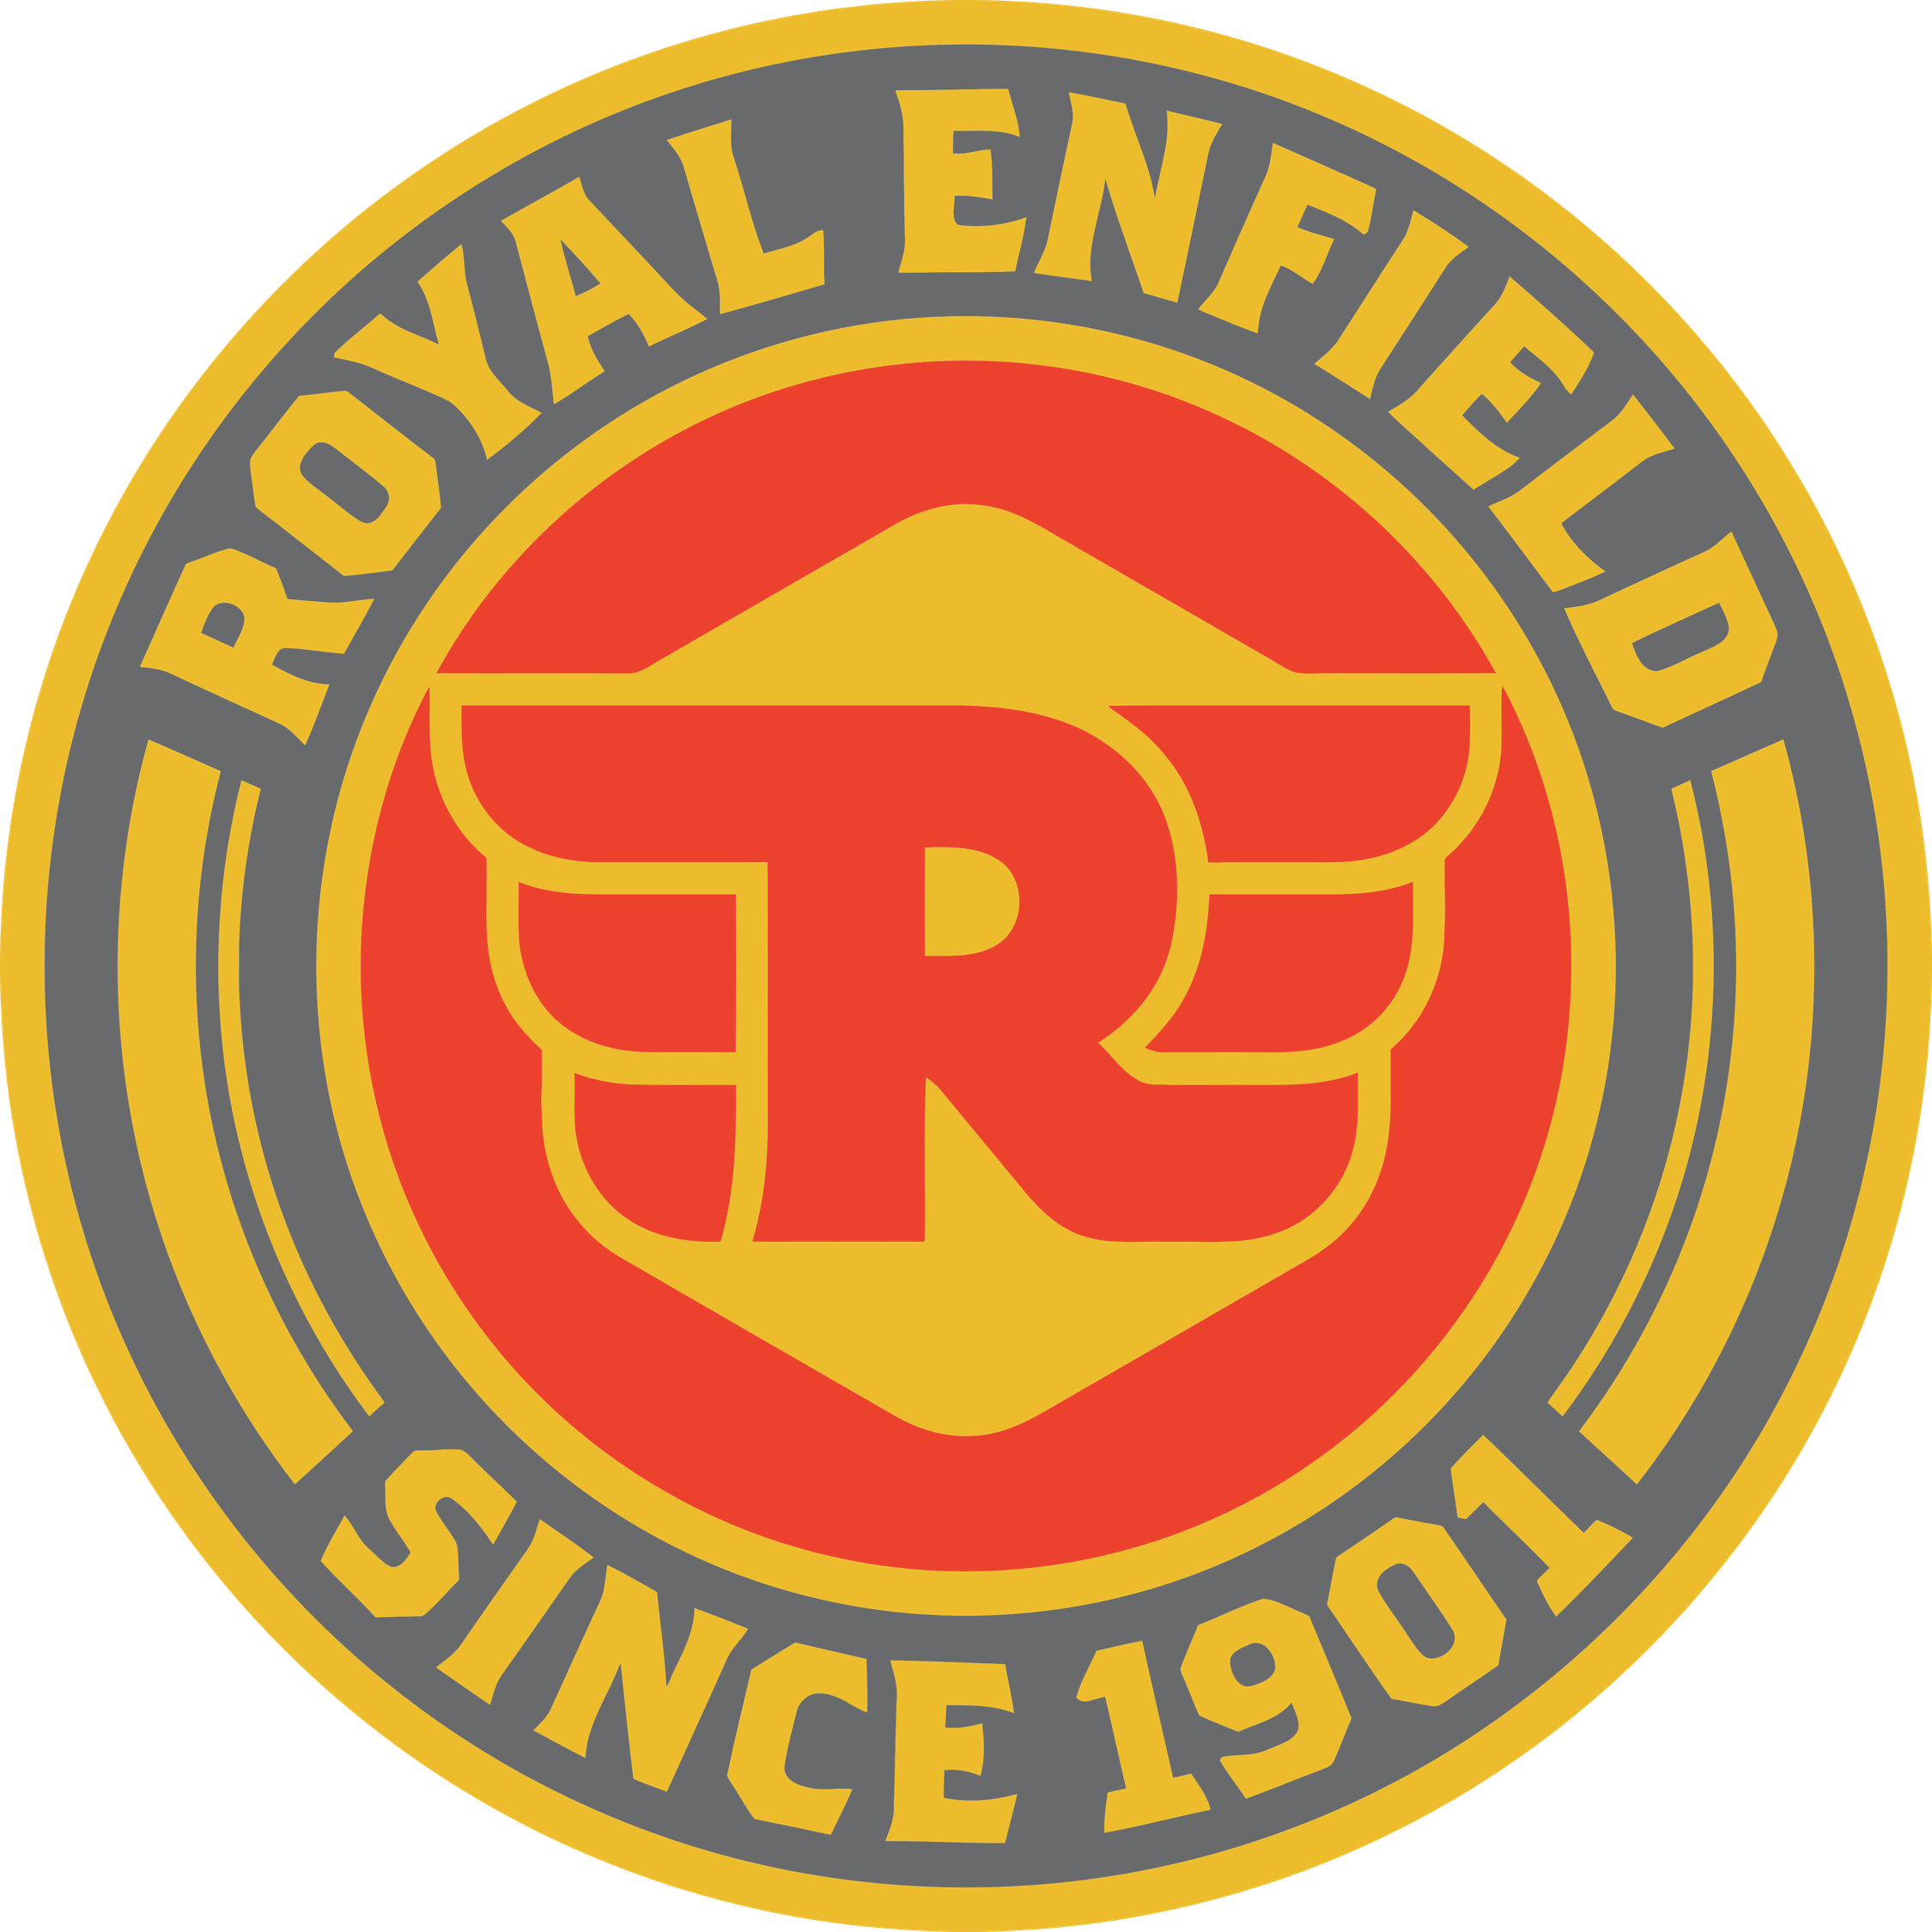 Royal Enfield Png Free Download (chocolate, gray, orange, black)